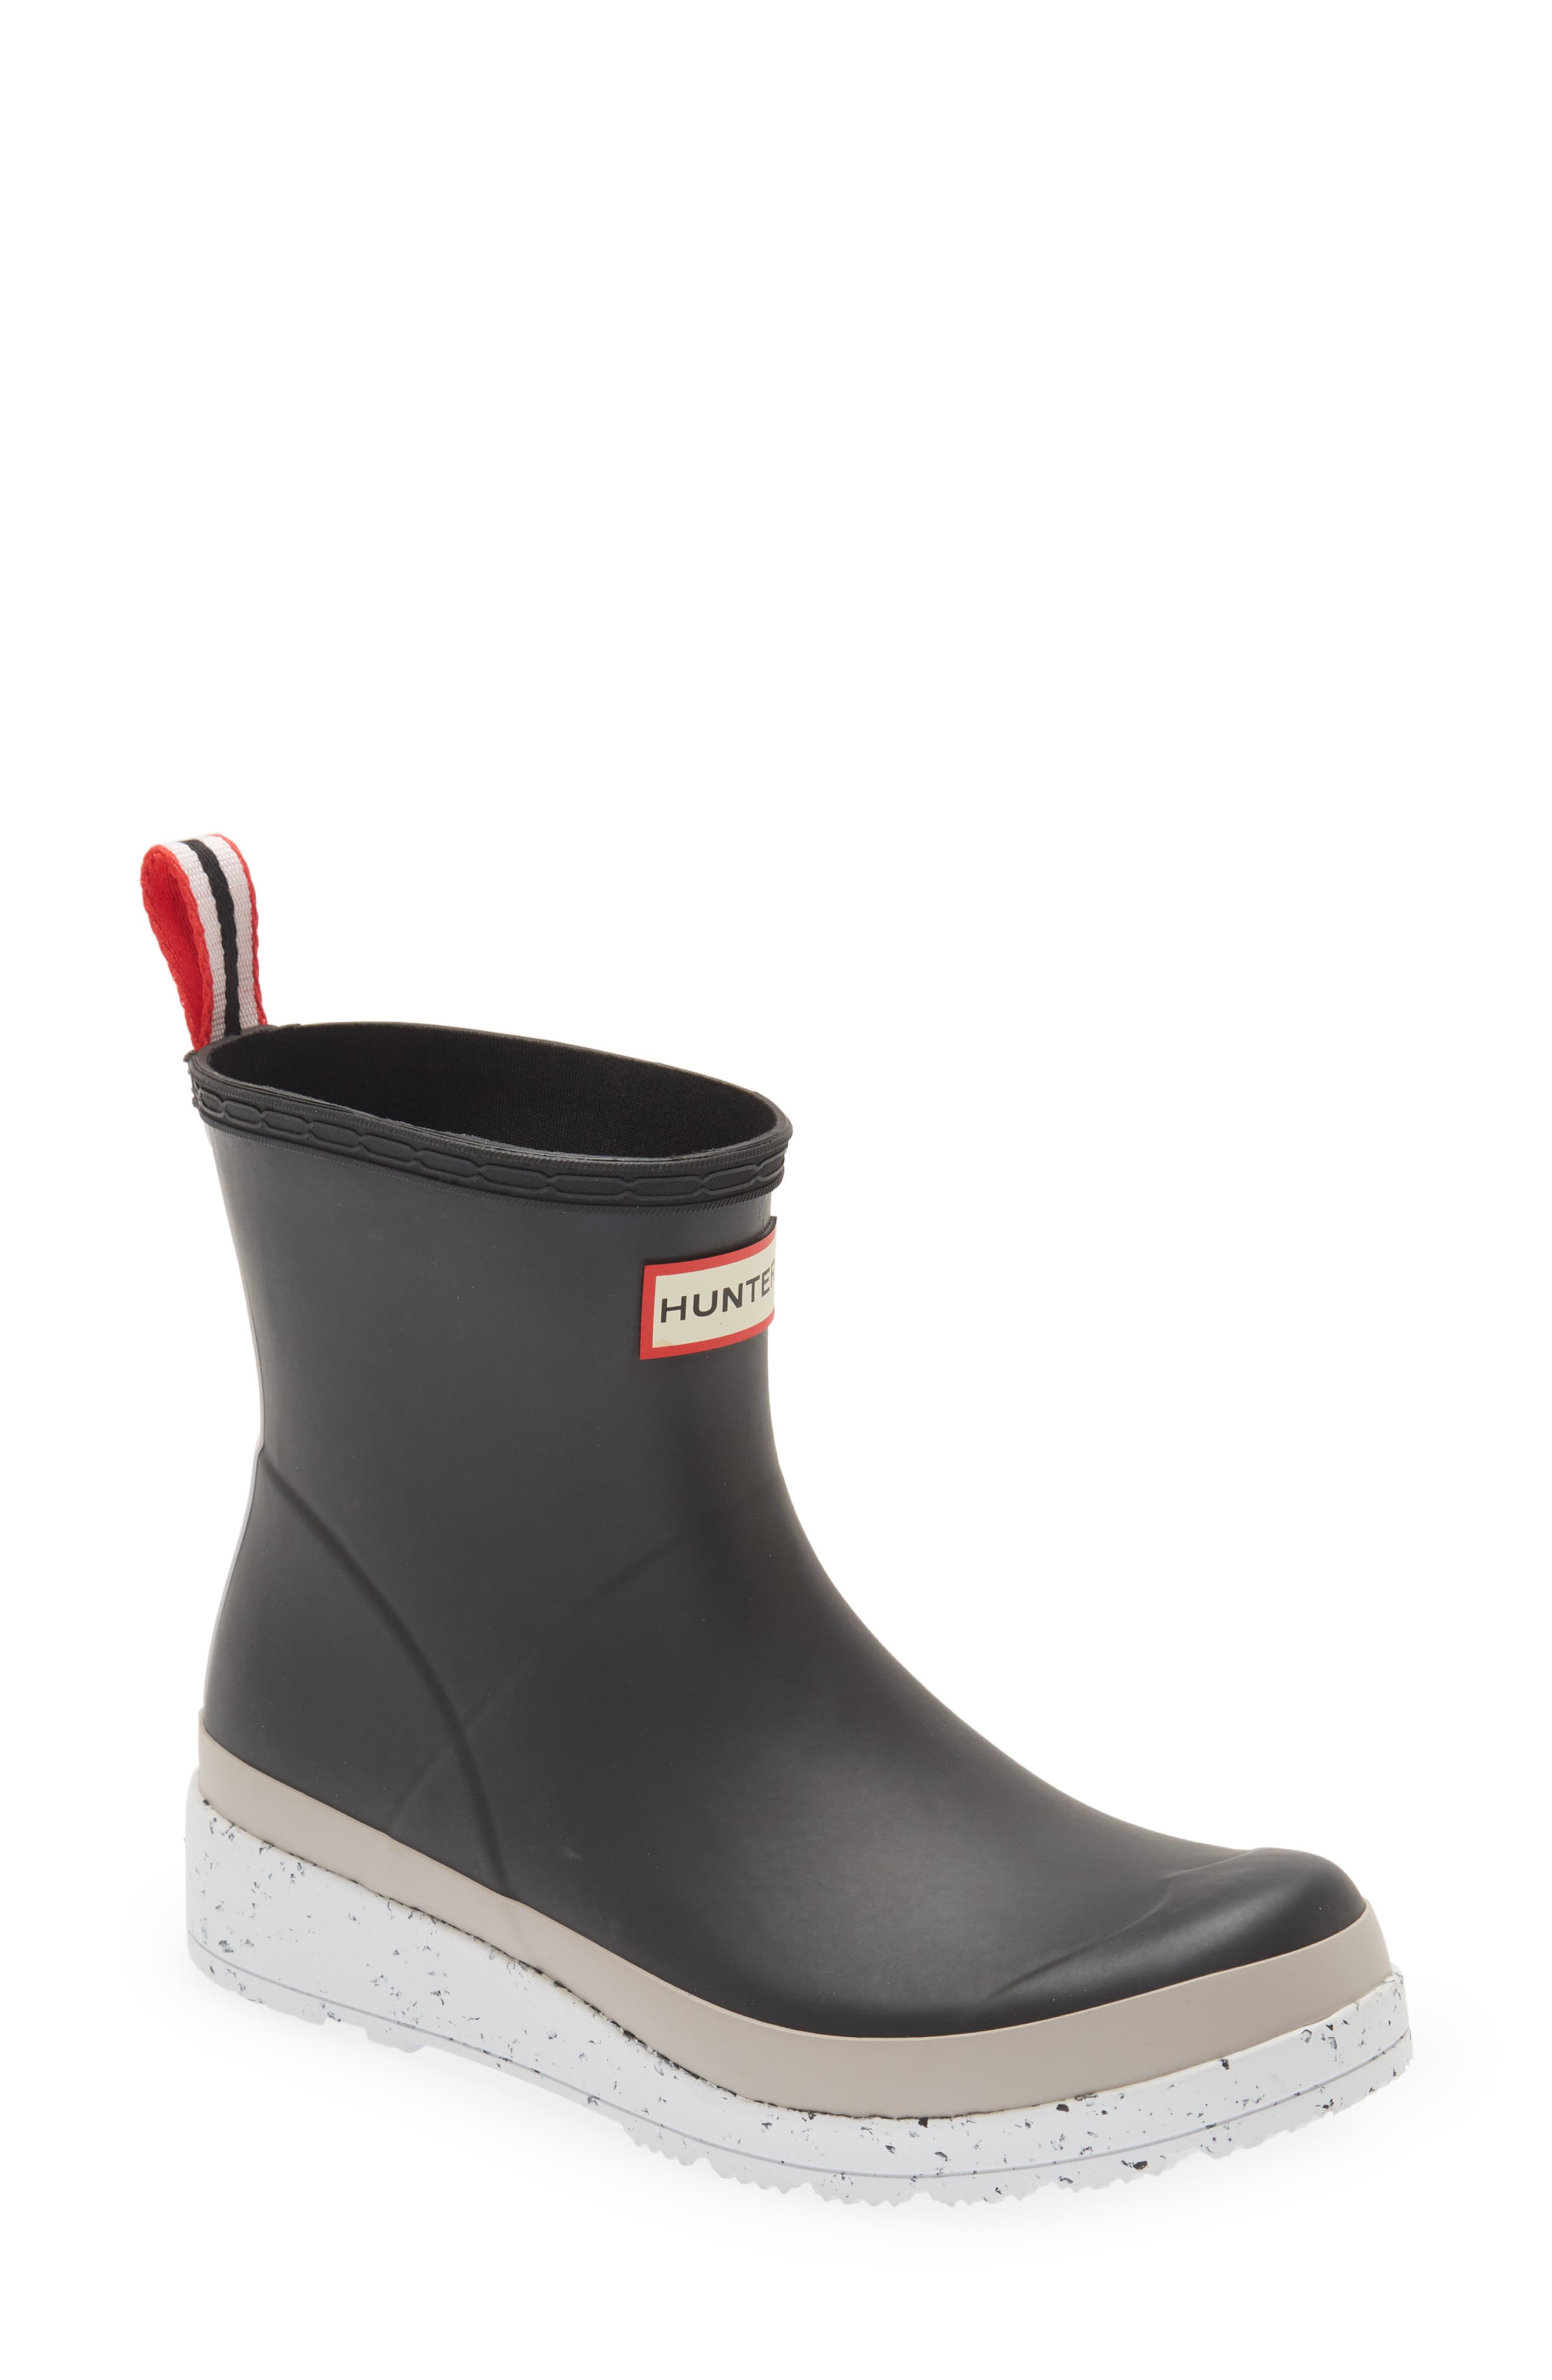 Womens High Heel Wellies Waterproof Wellington Boots Snow Rain Shoes Ladies Size 